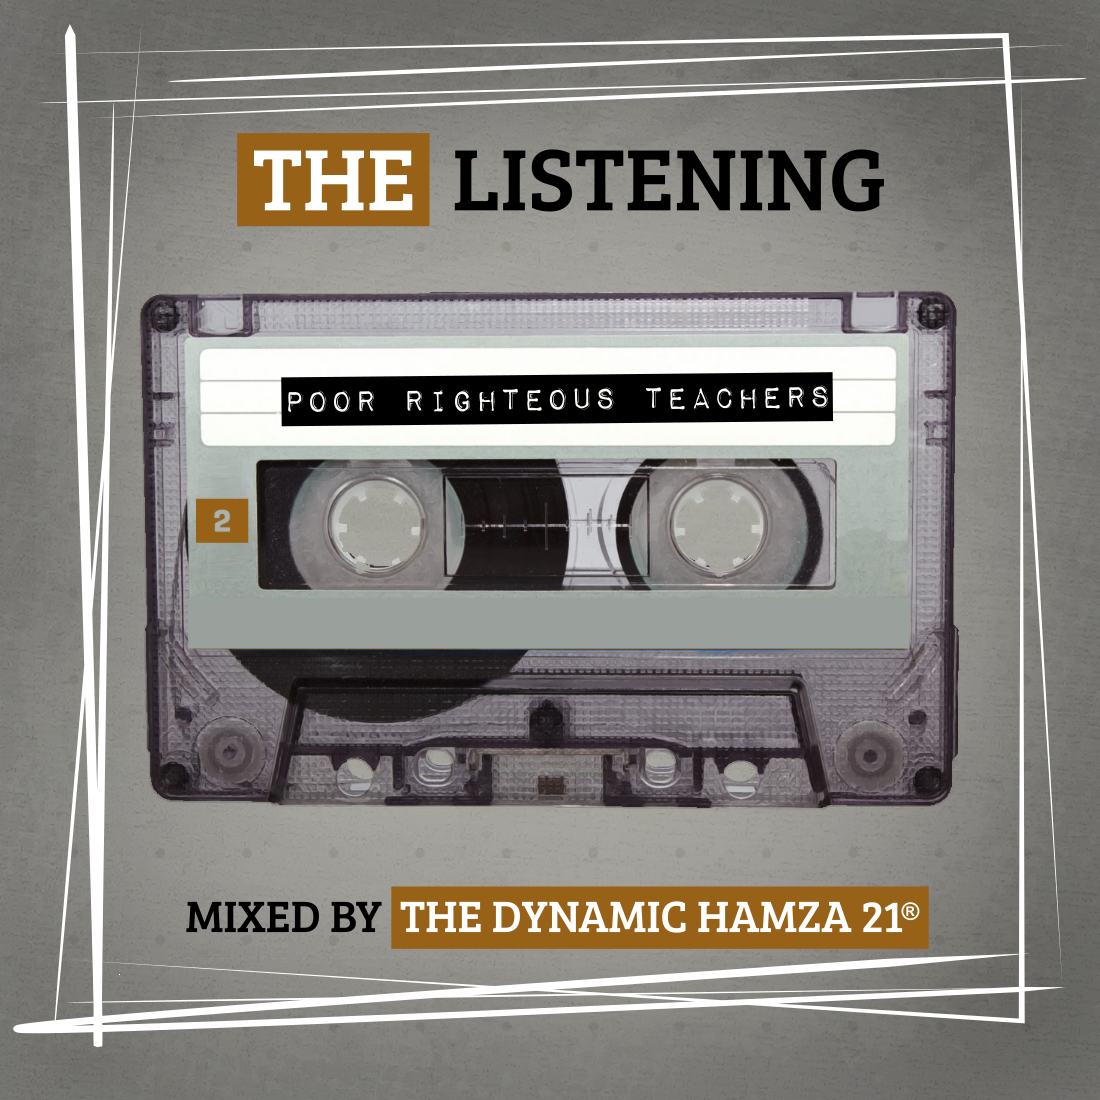 The Listening: Poor Righteous Teachers